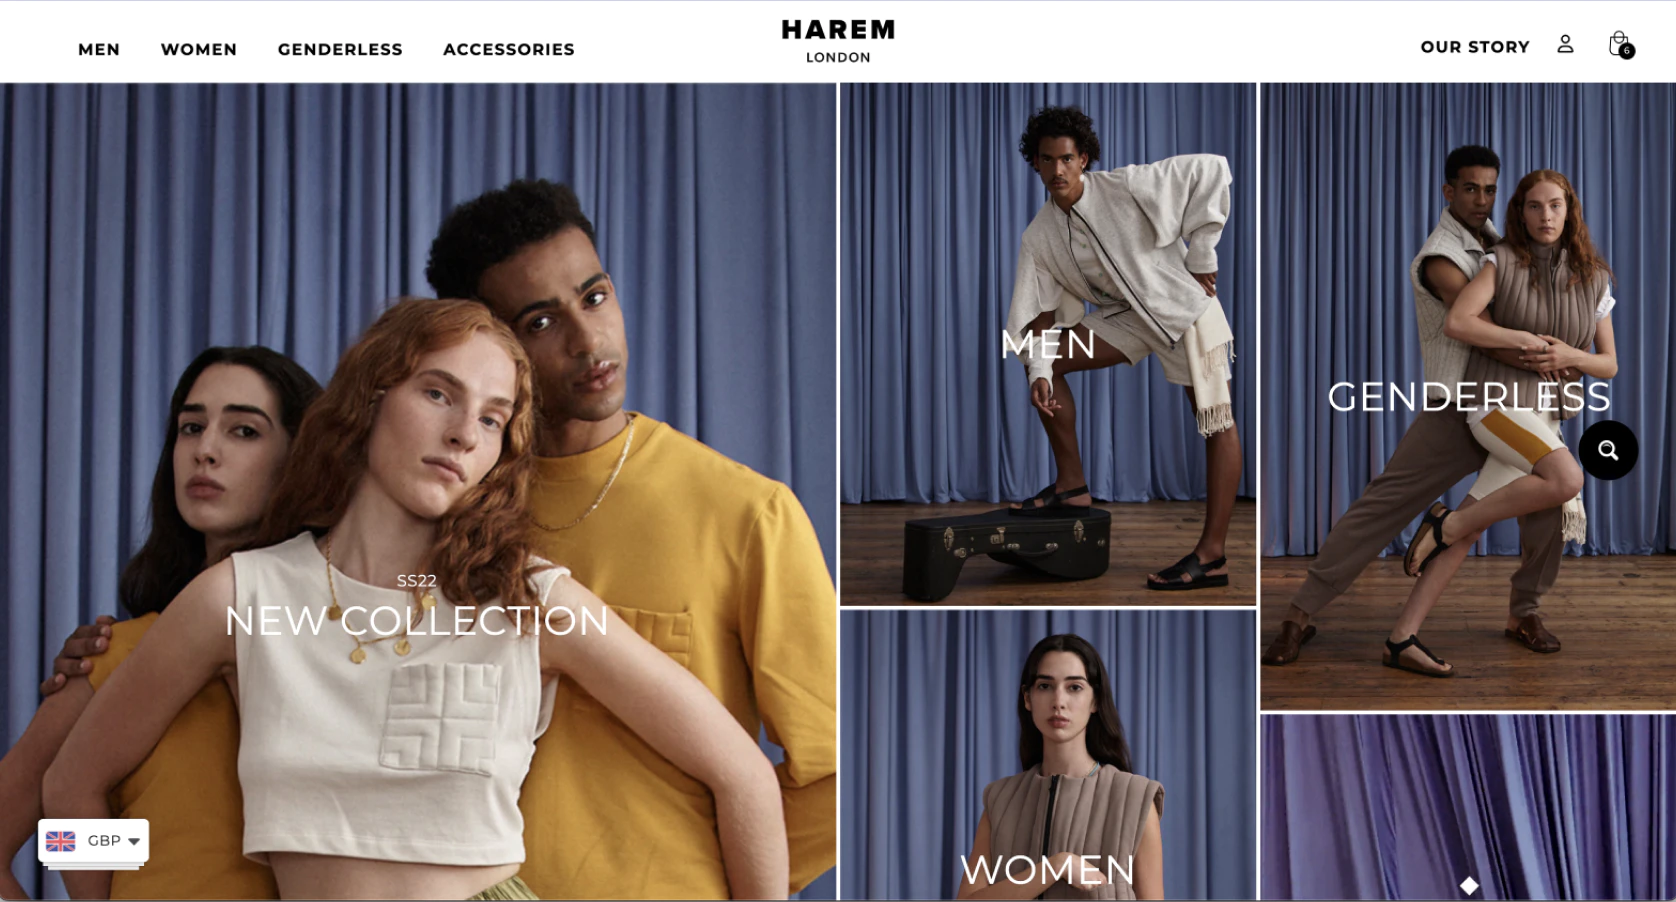 Harem London website